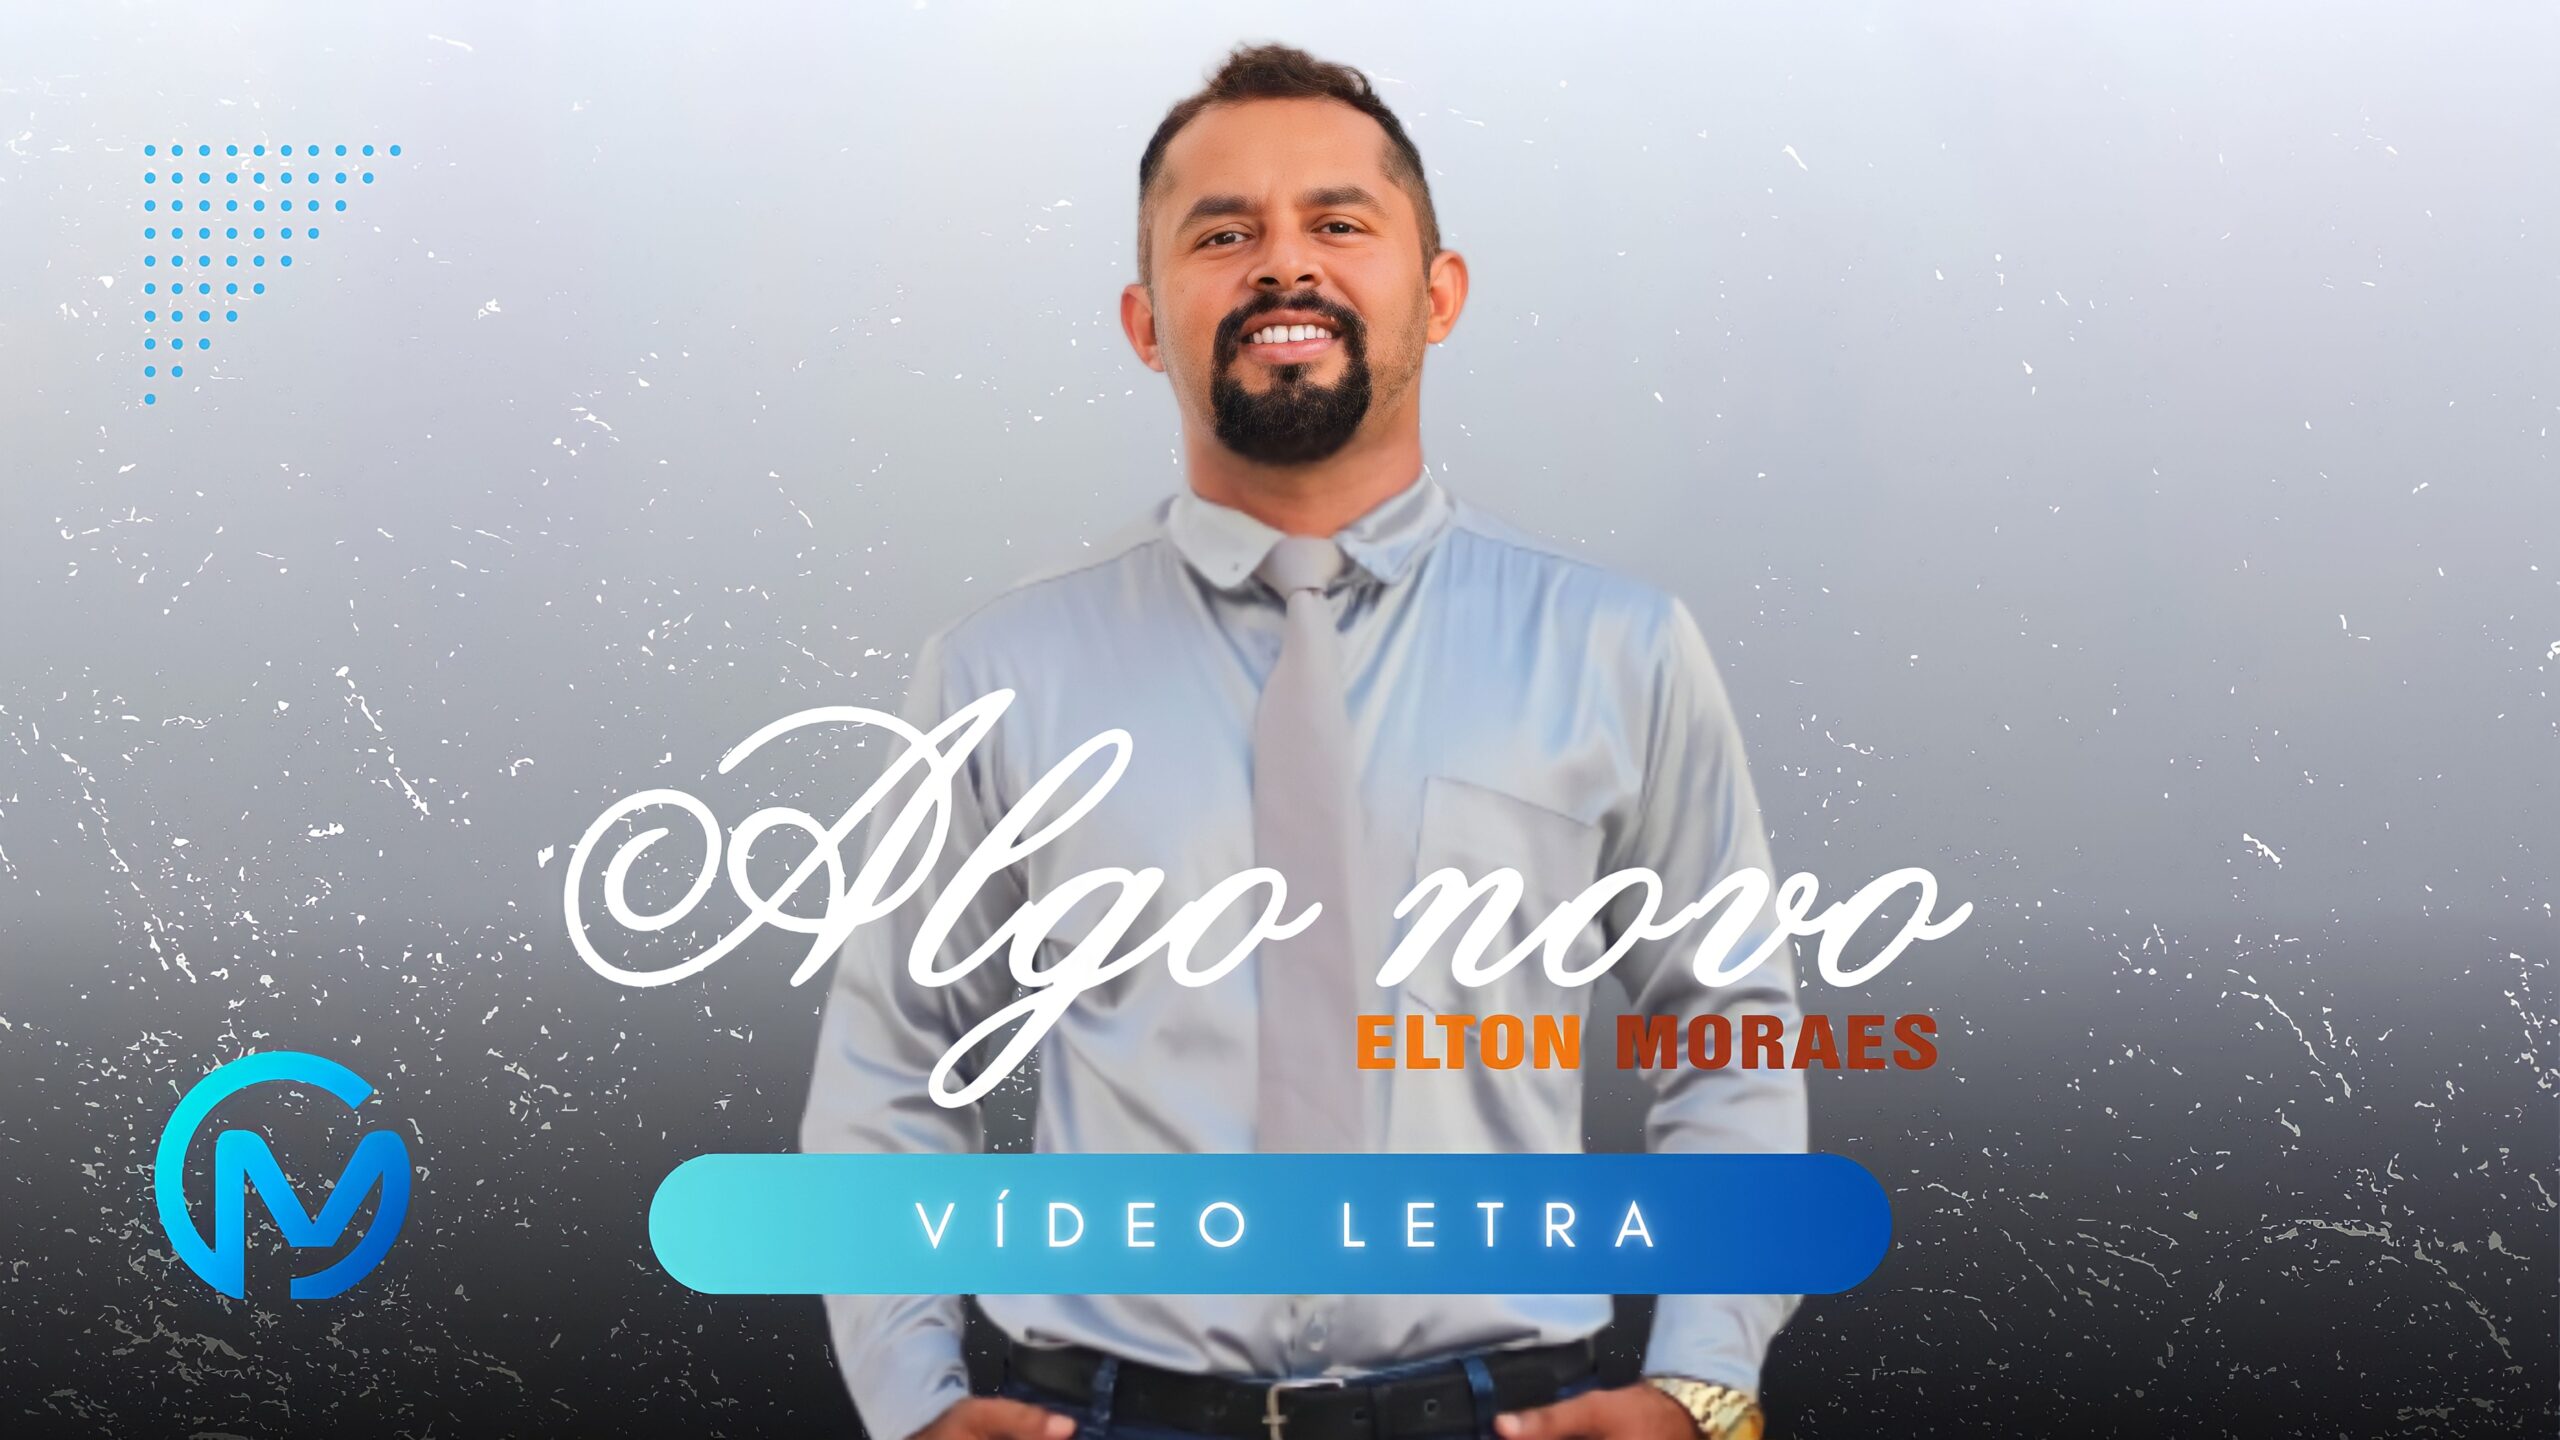 Algo novo[Elton Moraes] capa do vídeo